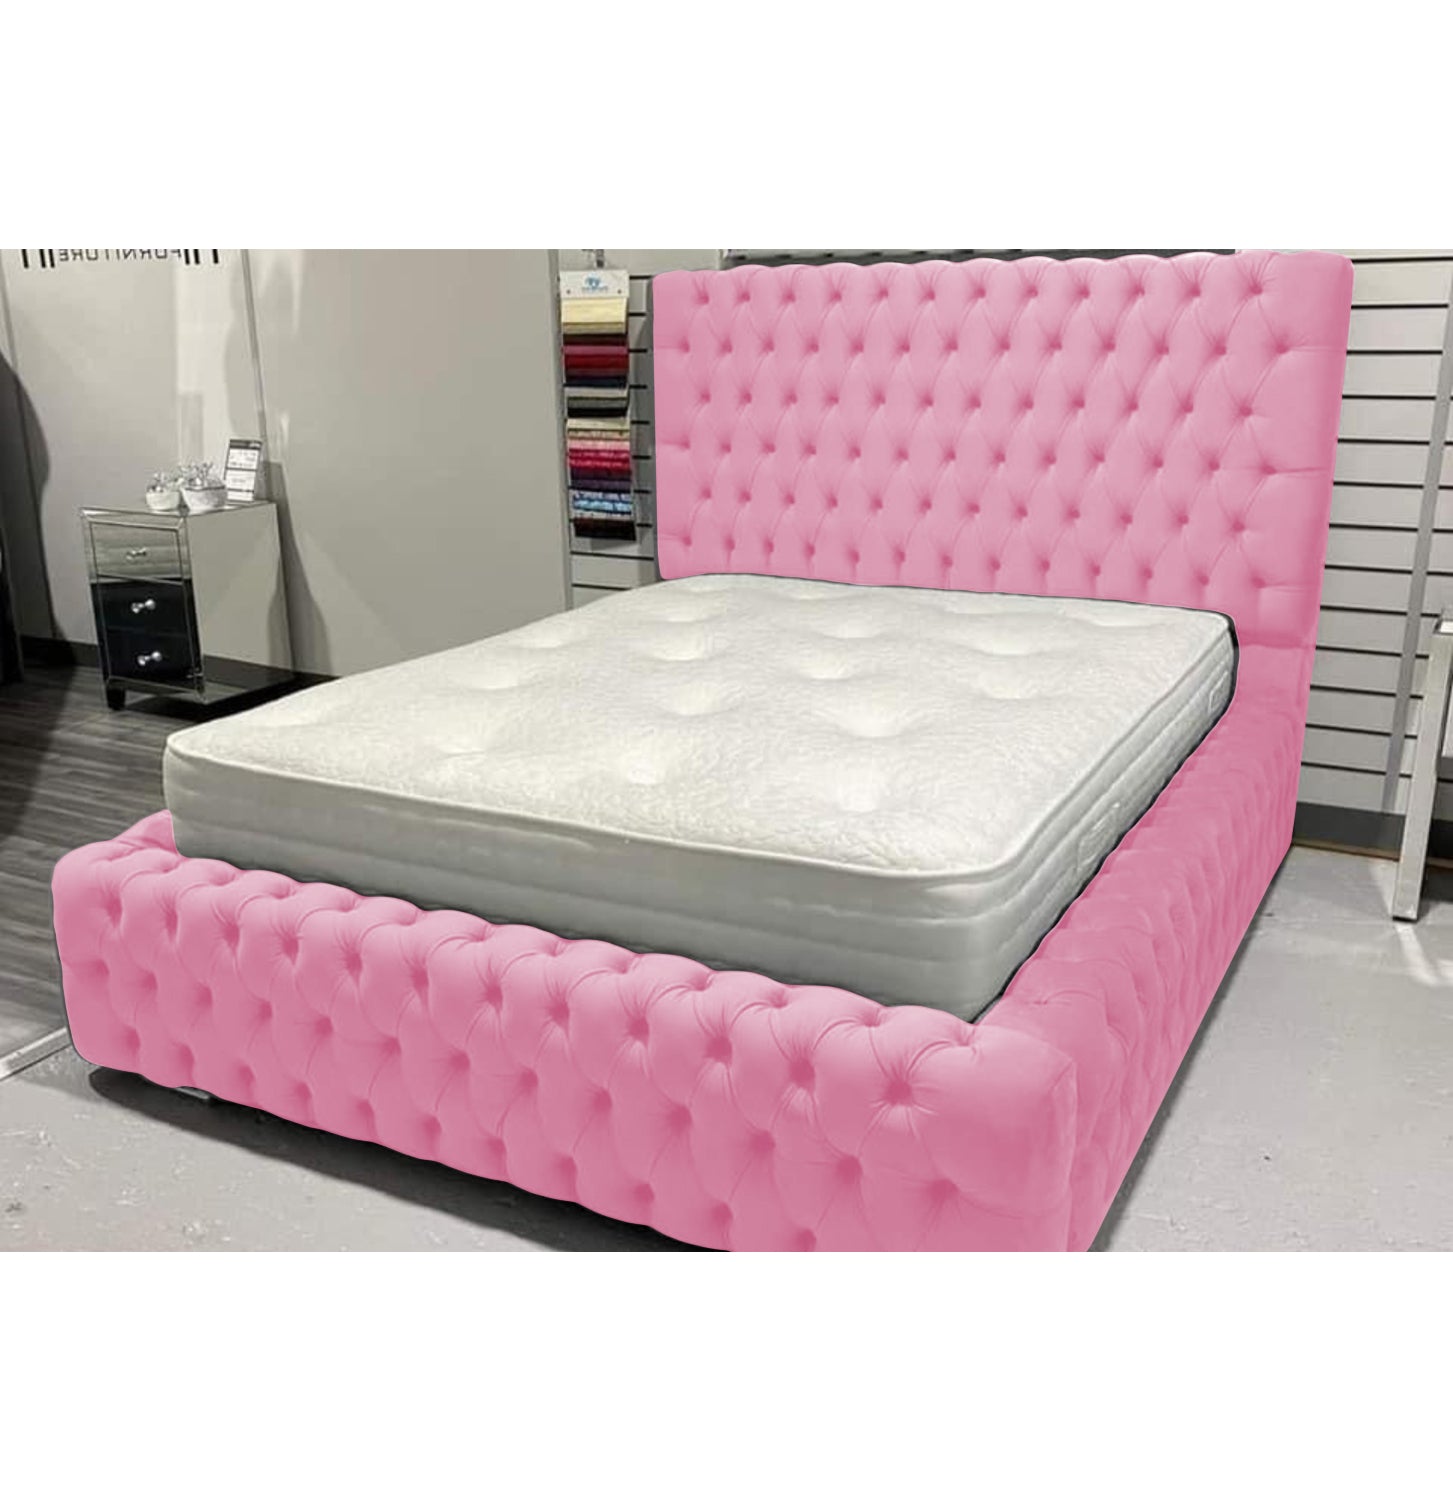 The Stlouis Upholstered Bed Frame